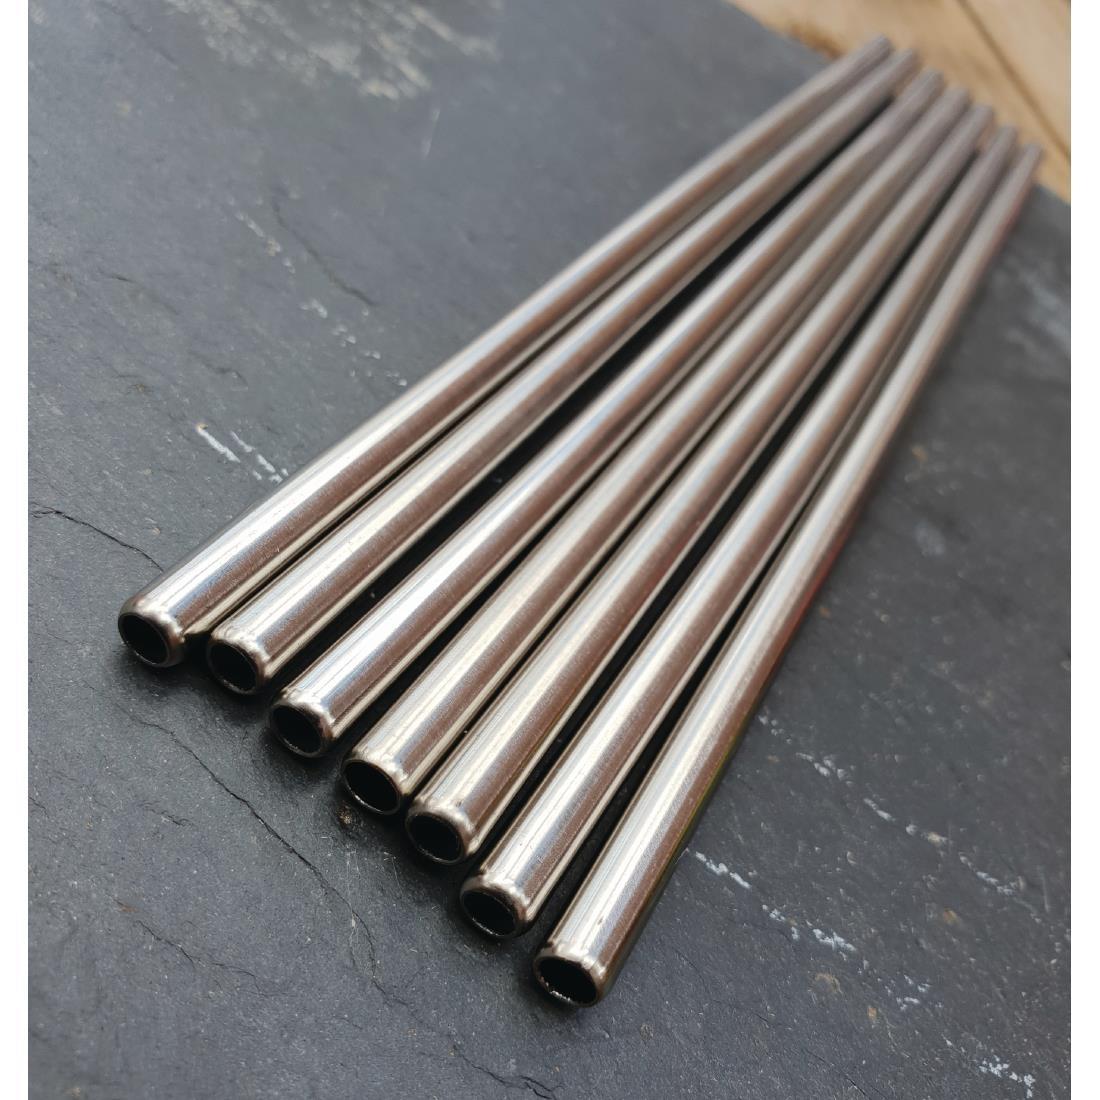 Stainless Steel Metal Straws 8.5" (Pack of 25) - CW490  - 3